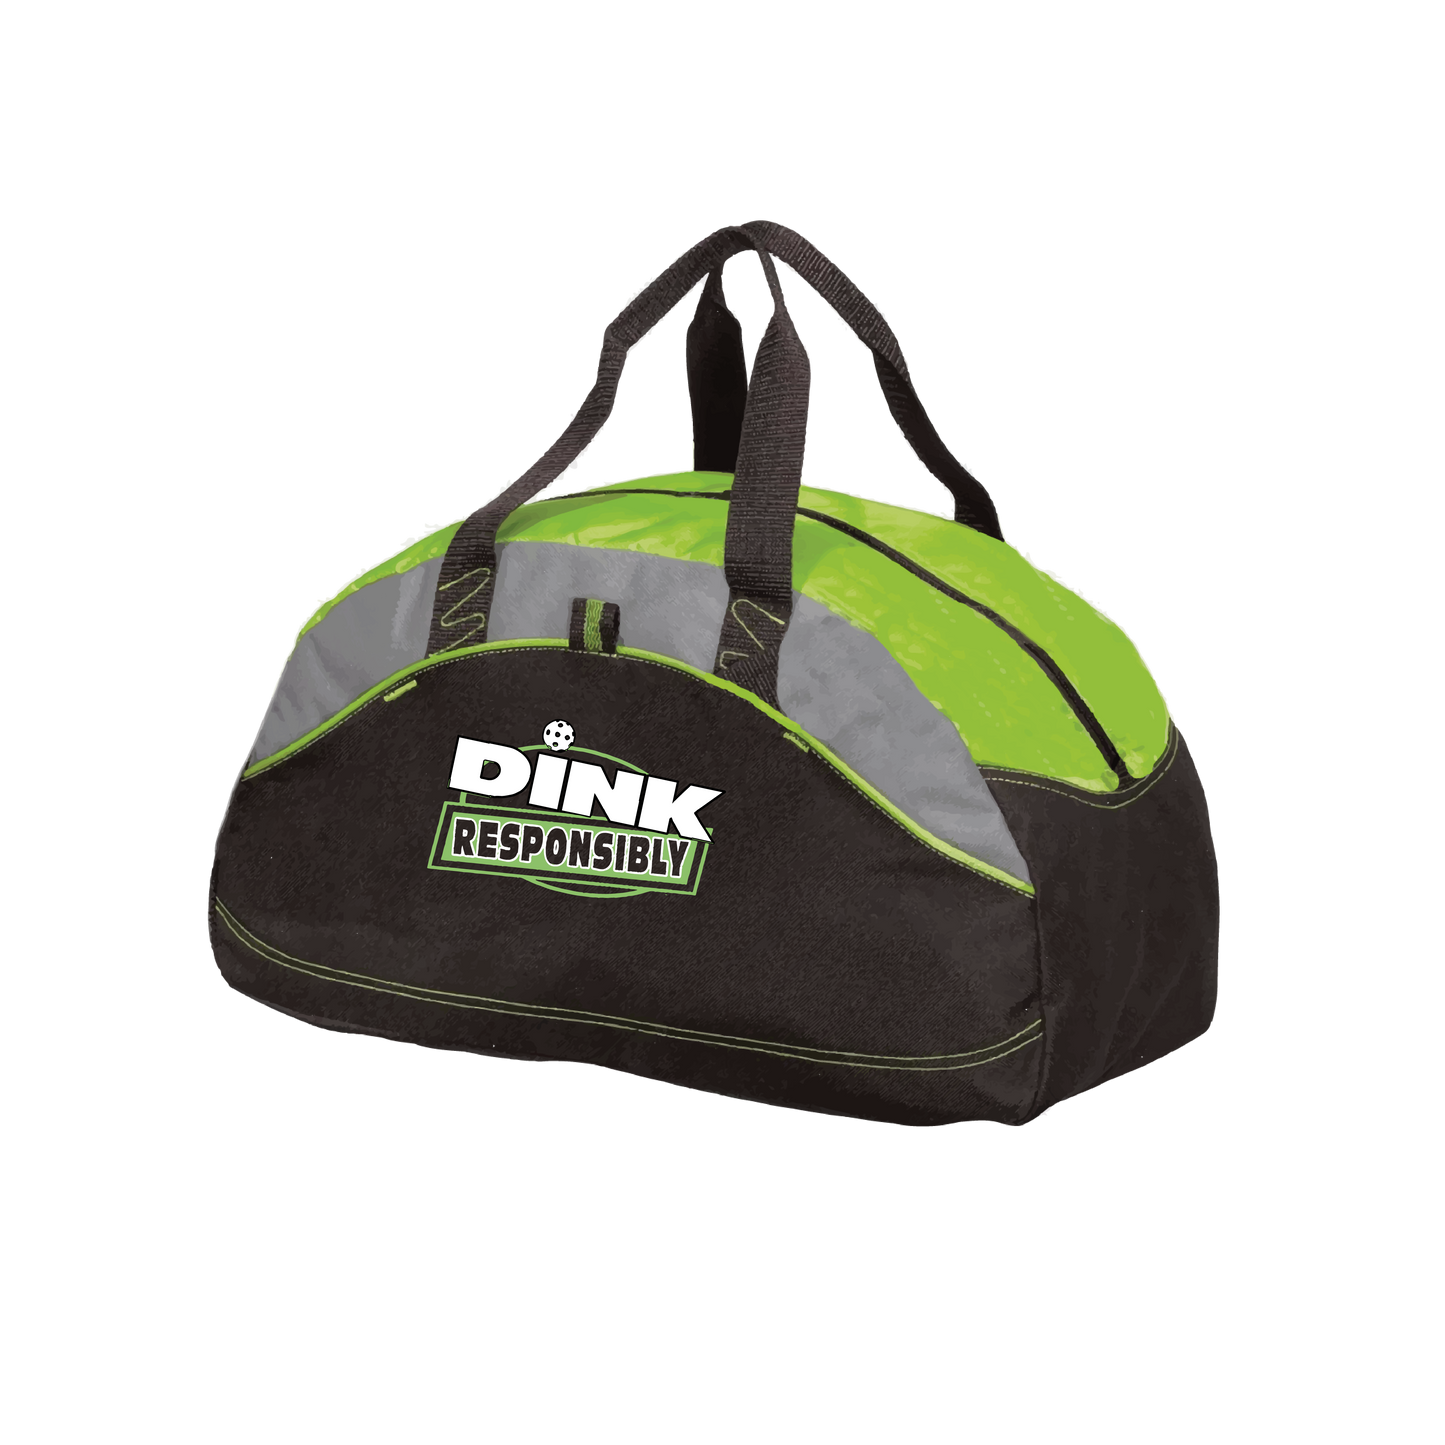 Dink Responsibly | Pickleball Sports Duffel | Medium Size Court Bag